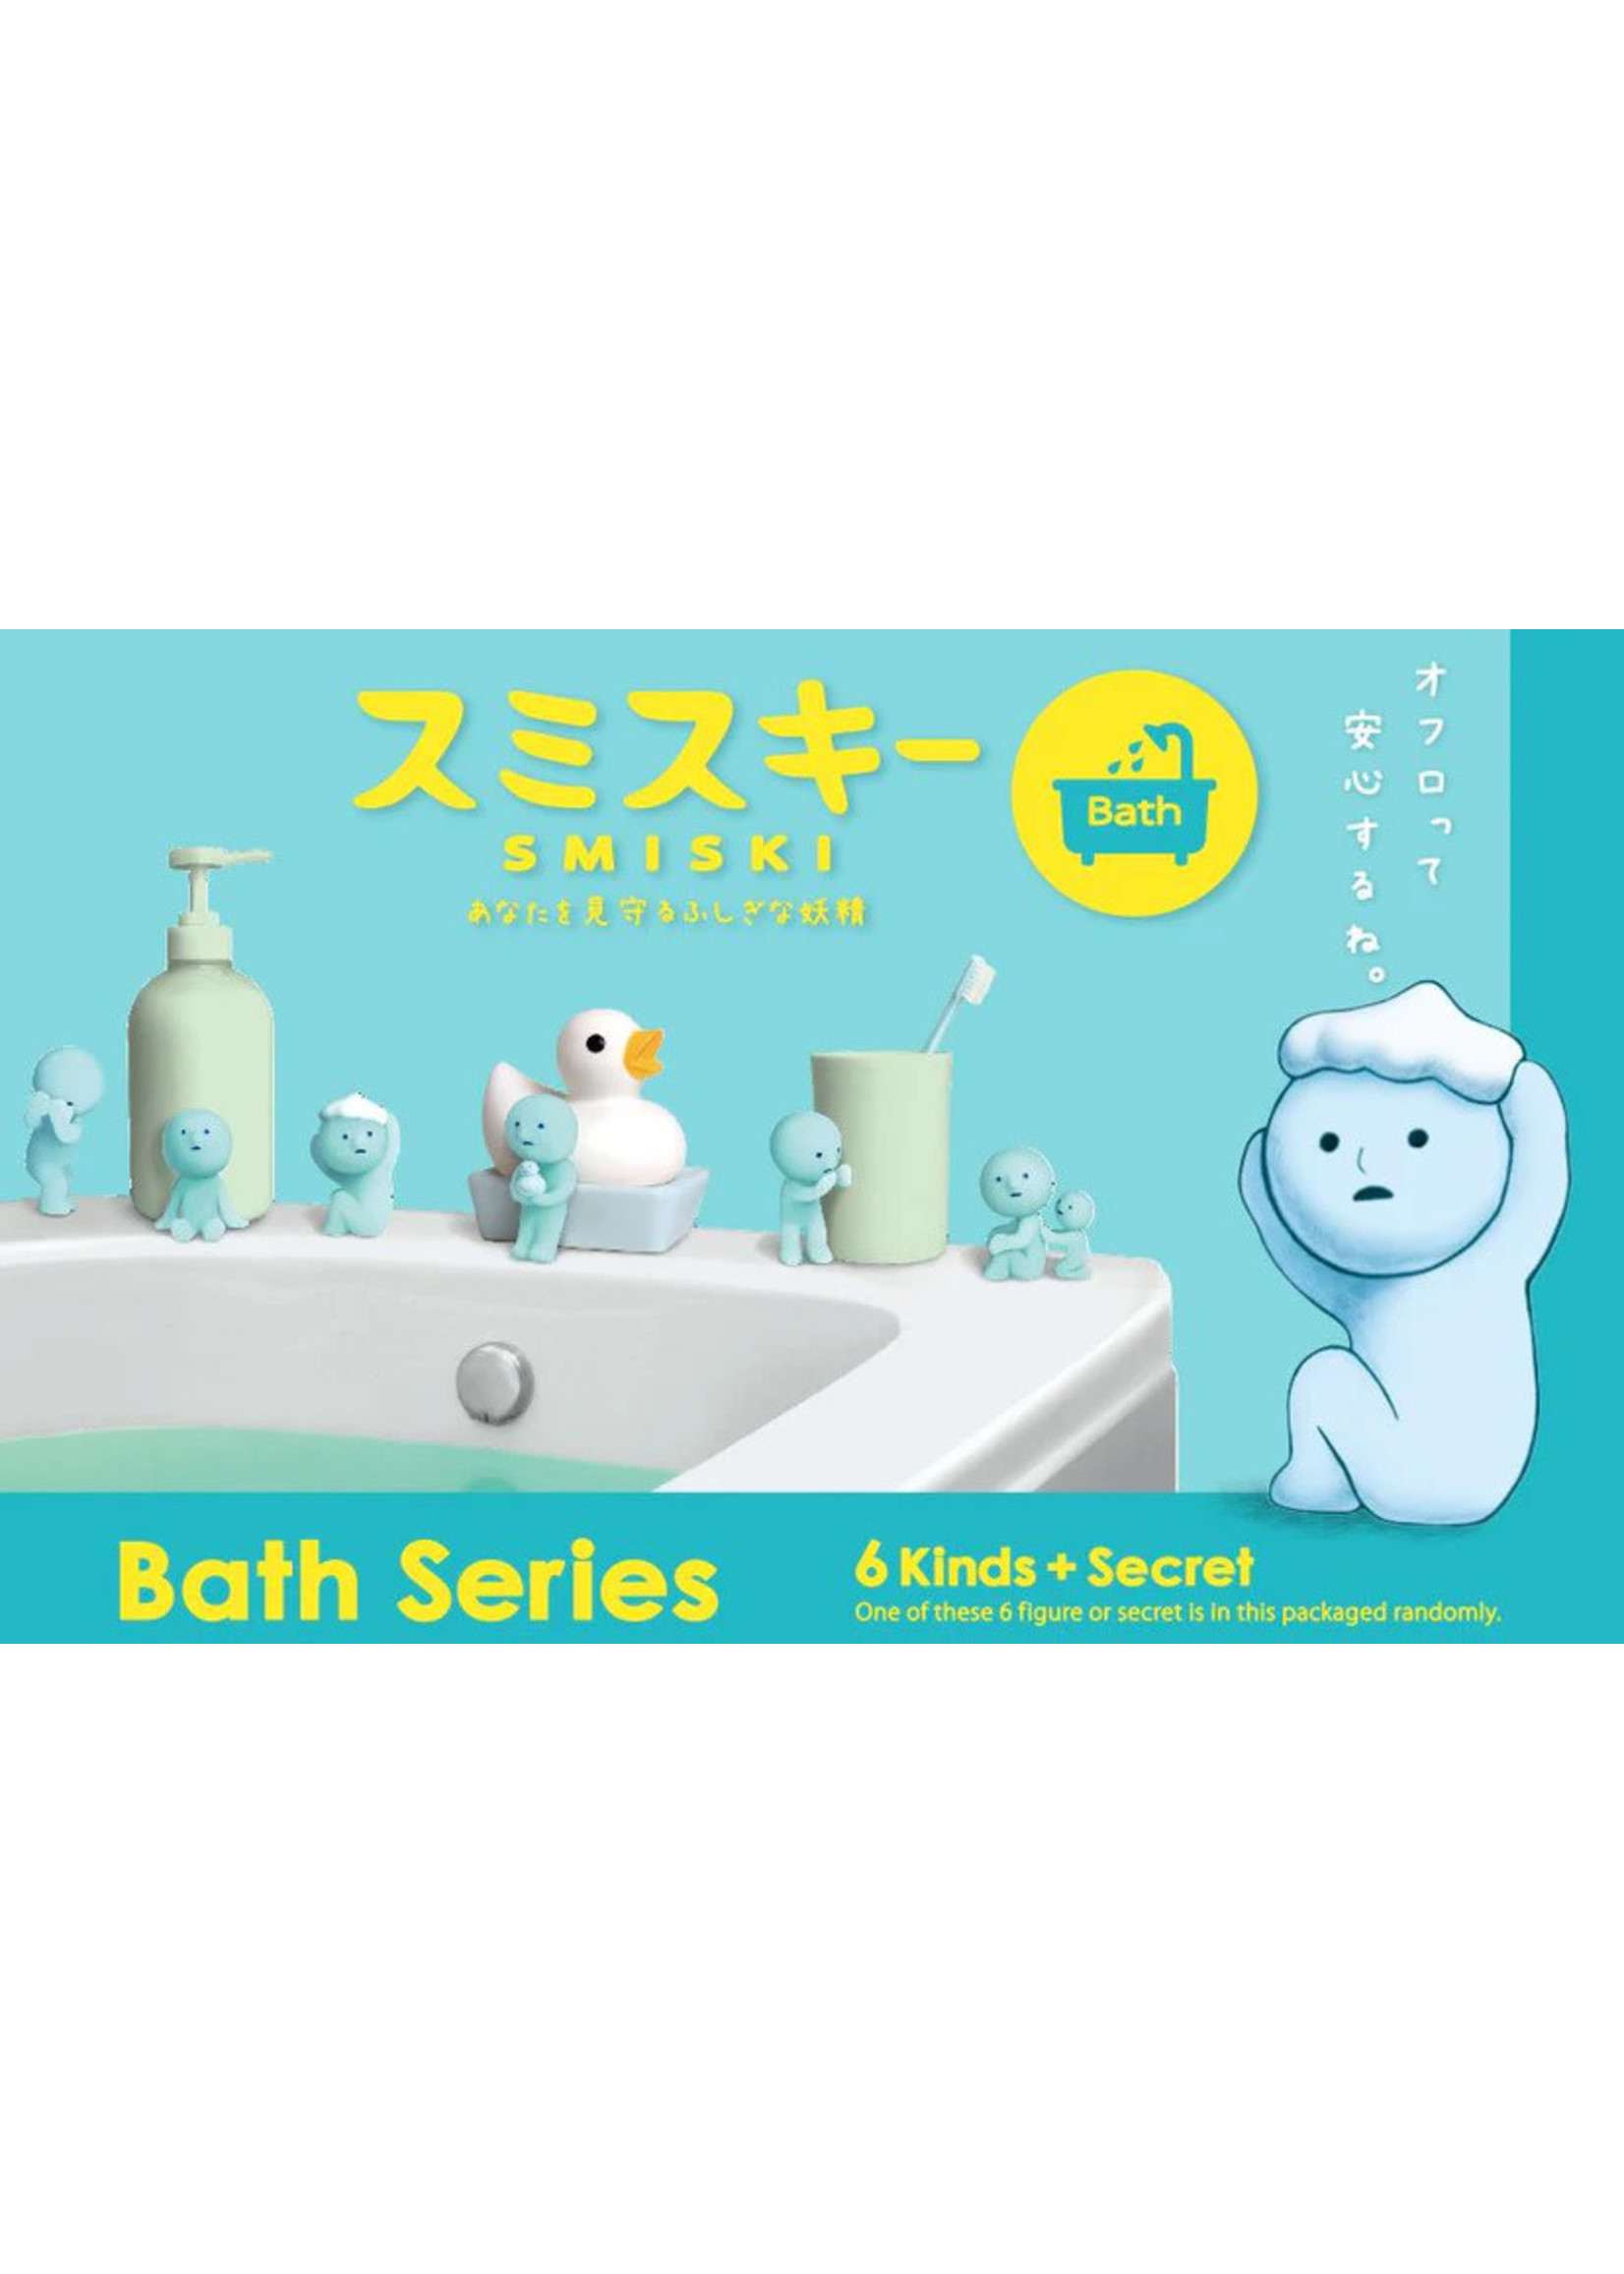 Smiski Mini Figure Bath Series - IRL Game Shop